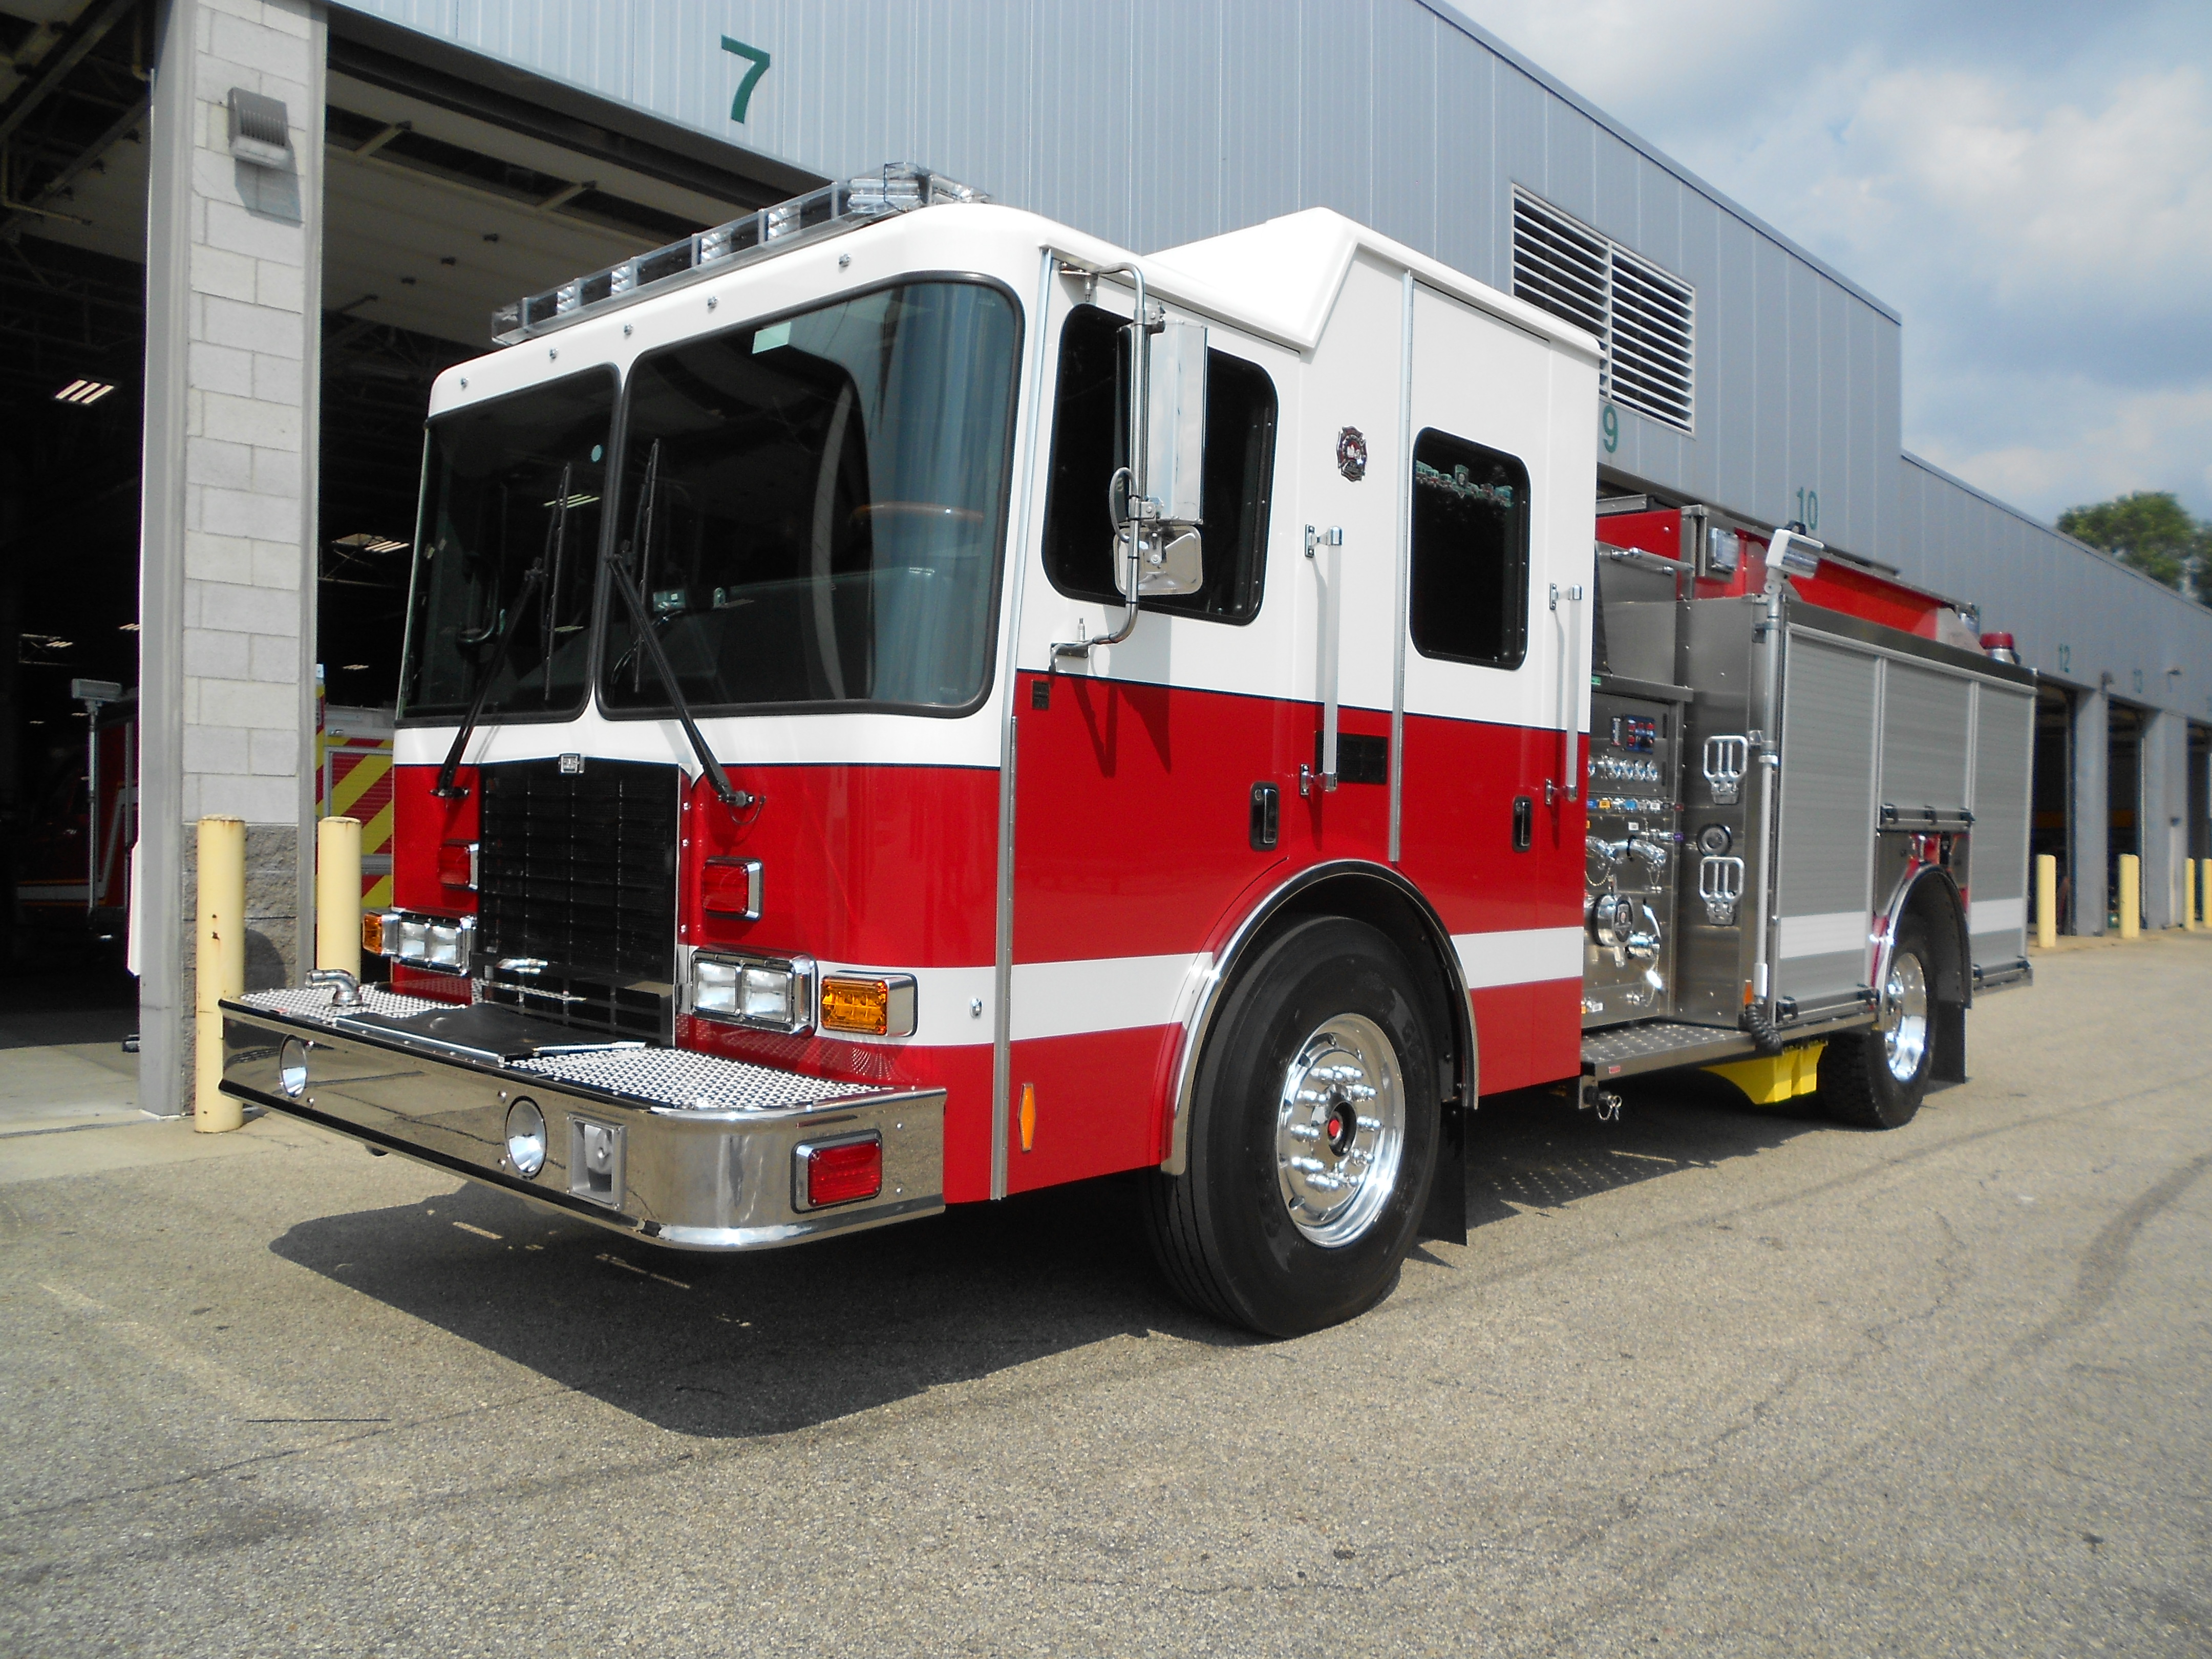 North Kingstown Fire Department, RI – #22743